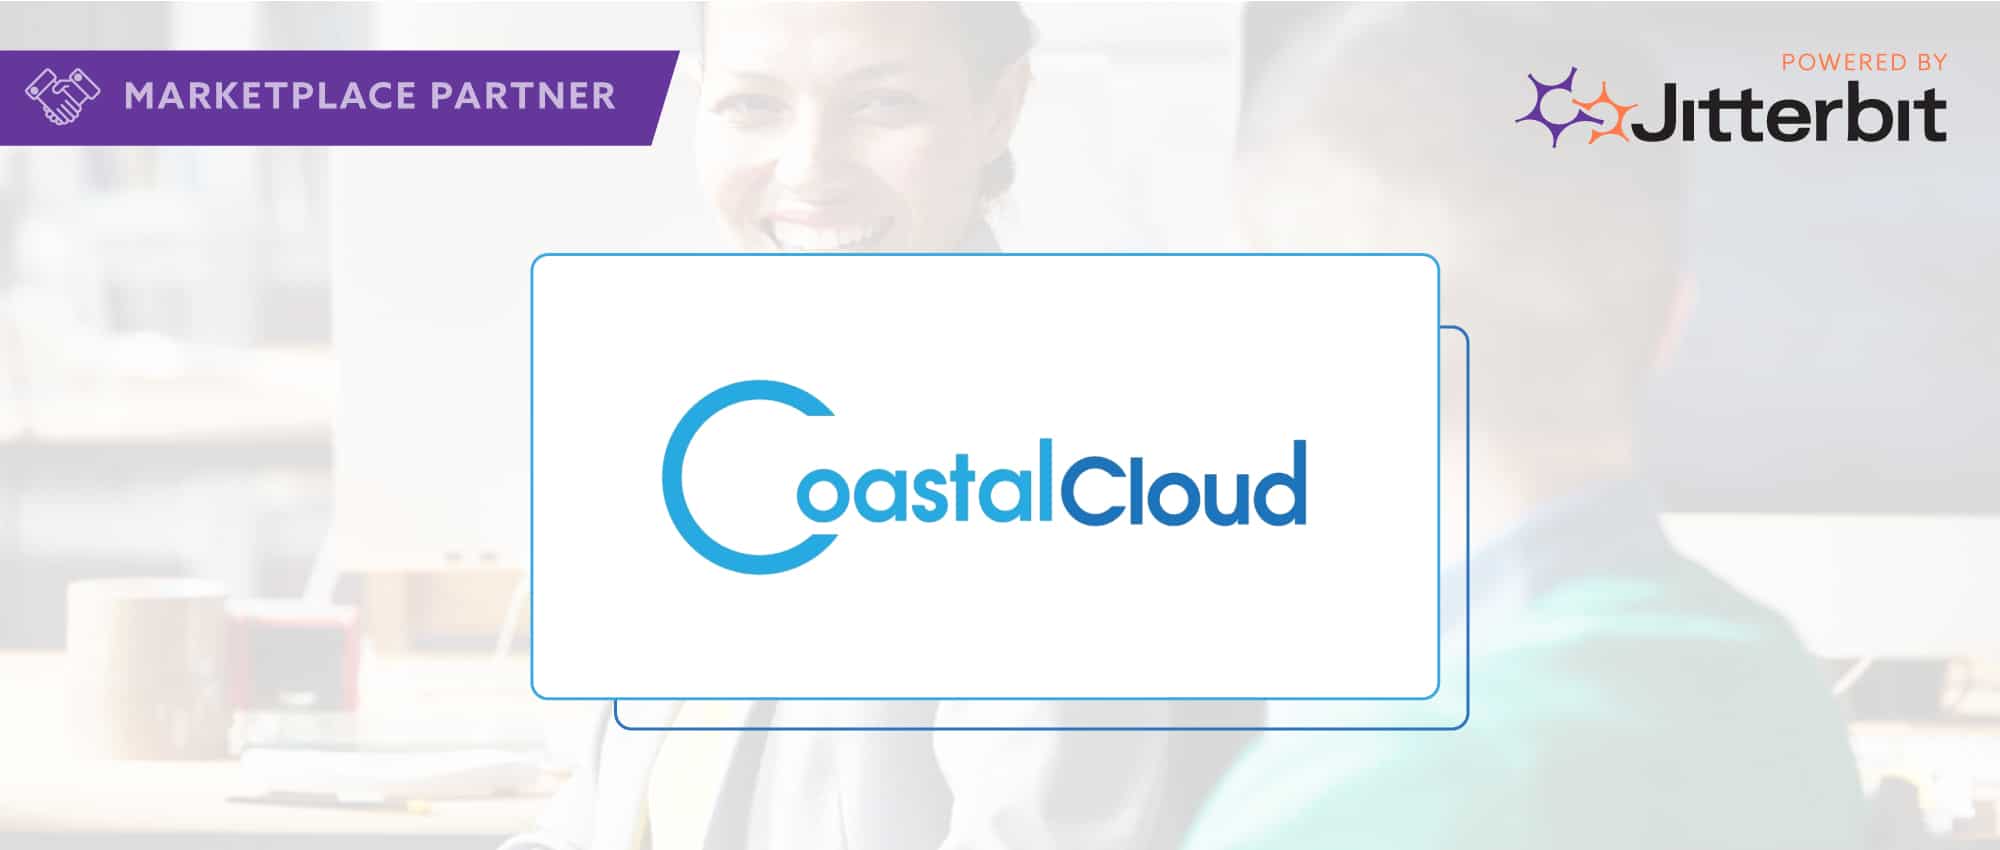 Coastal Cloud - Marketplace Partner - Featured Image